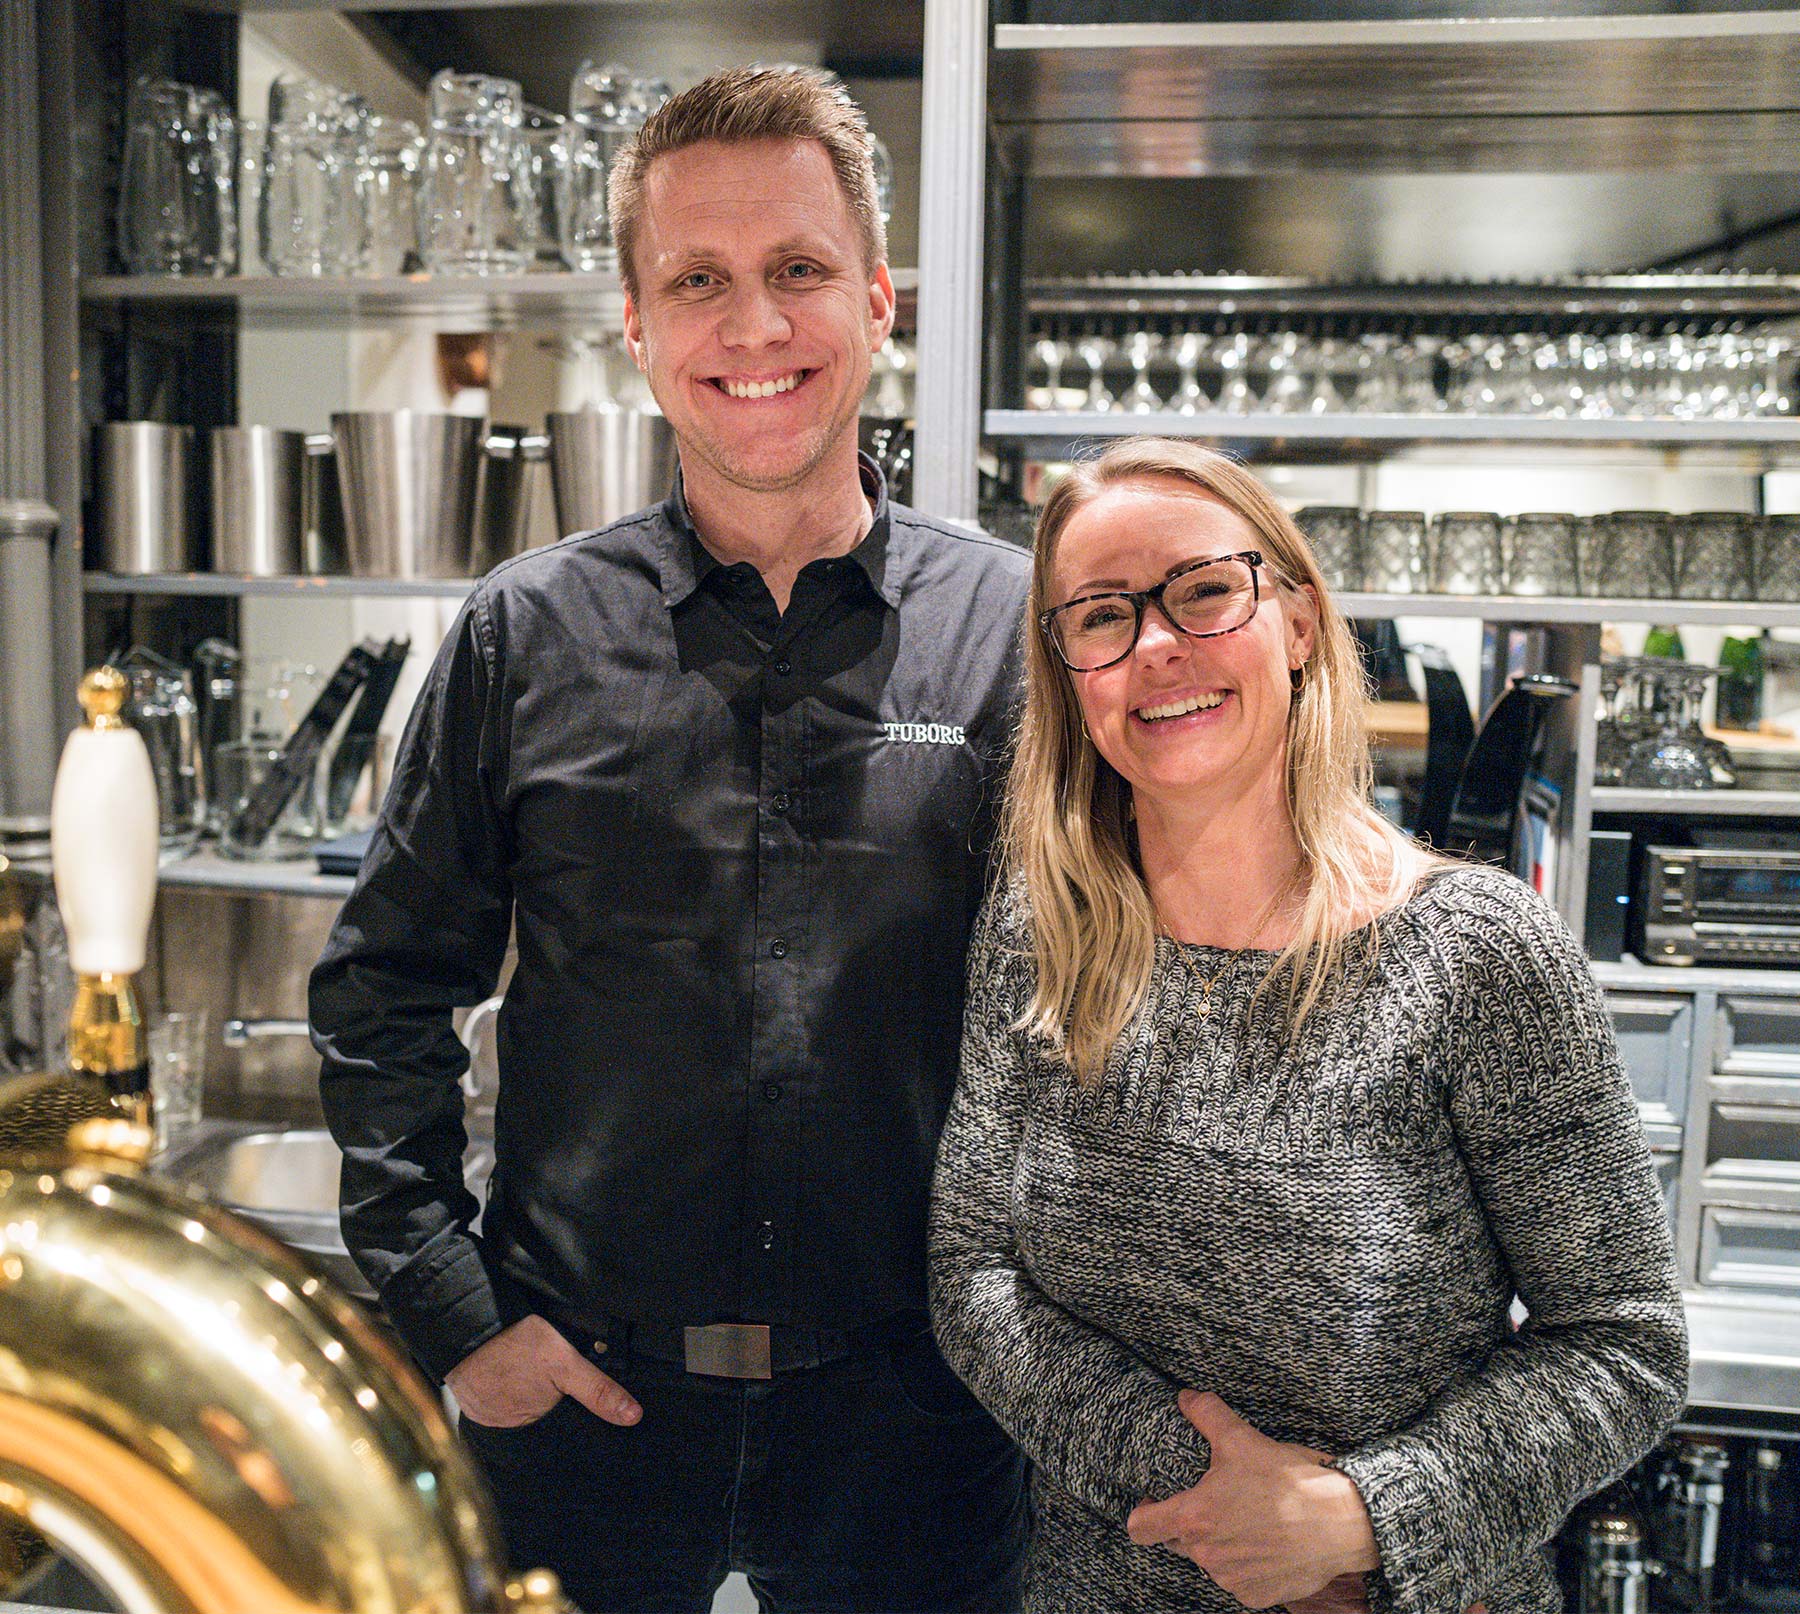 Det nye værtspar på Restaurant Beghuset, Linea og Lars Olsen. Foto: TorbenStender.